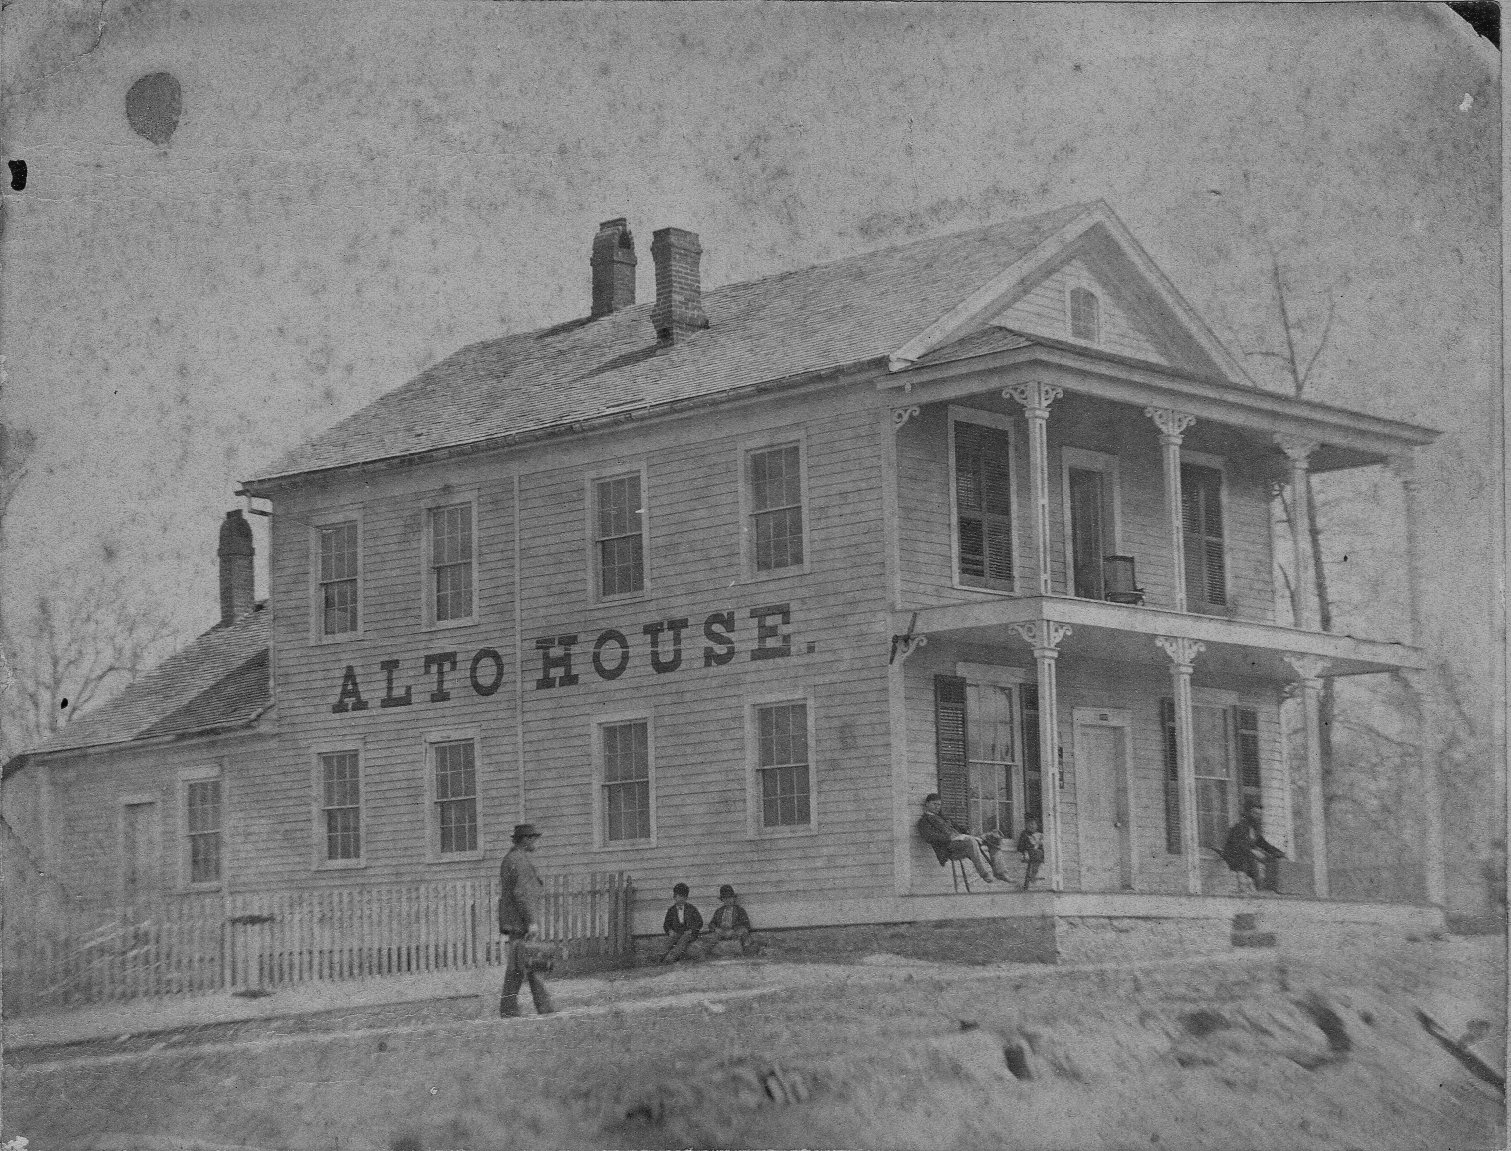 Alto House (Hotel)